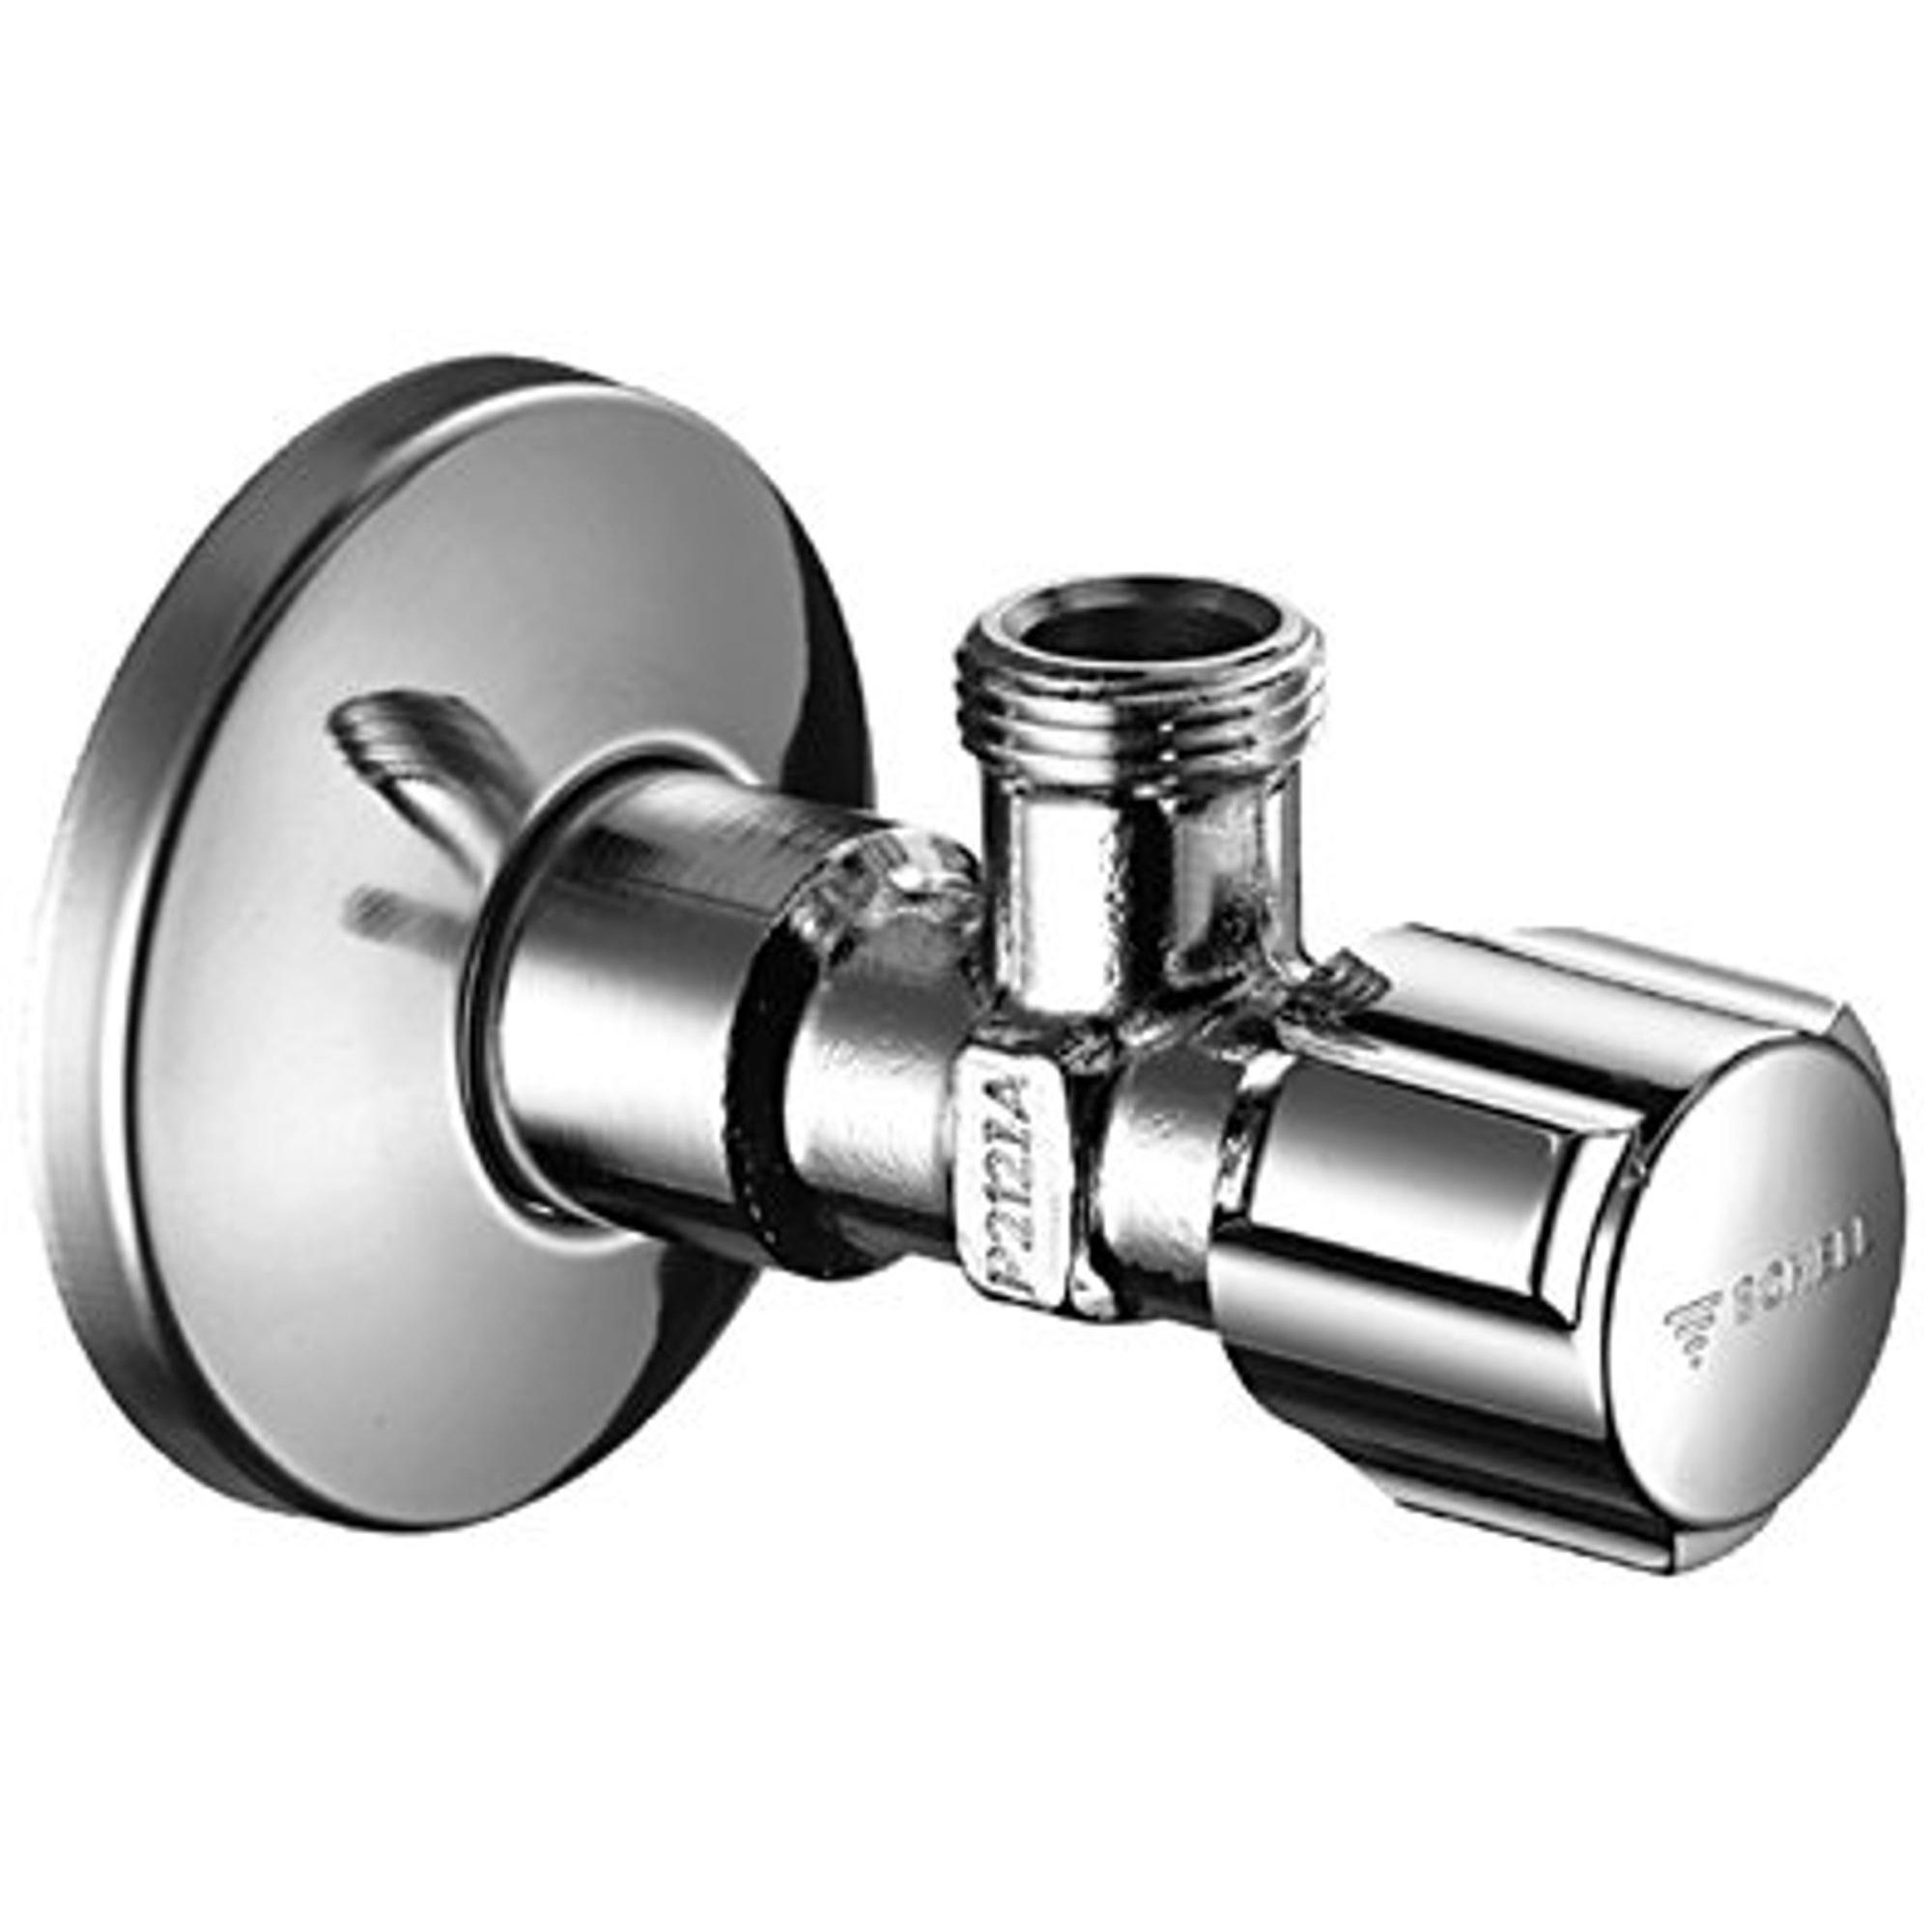 https://static.rorix.nl/image/product/galvano/2000x2000/D130001001198550.jpg/schell-comfort-robinet-d-equerre-1-2x3-4-chrome-ga70677.jpg